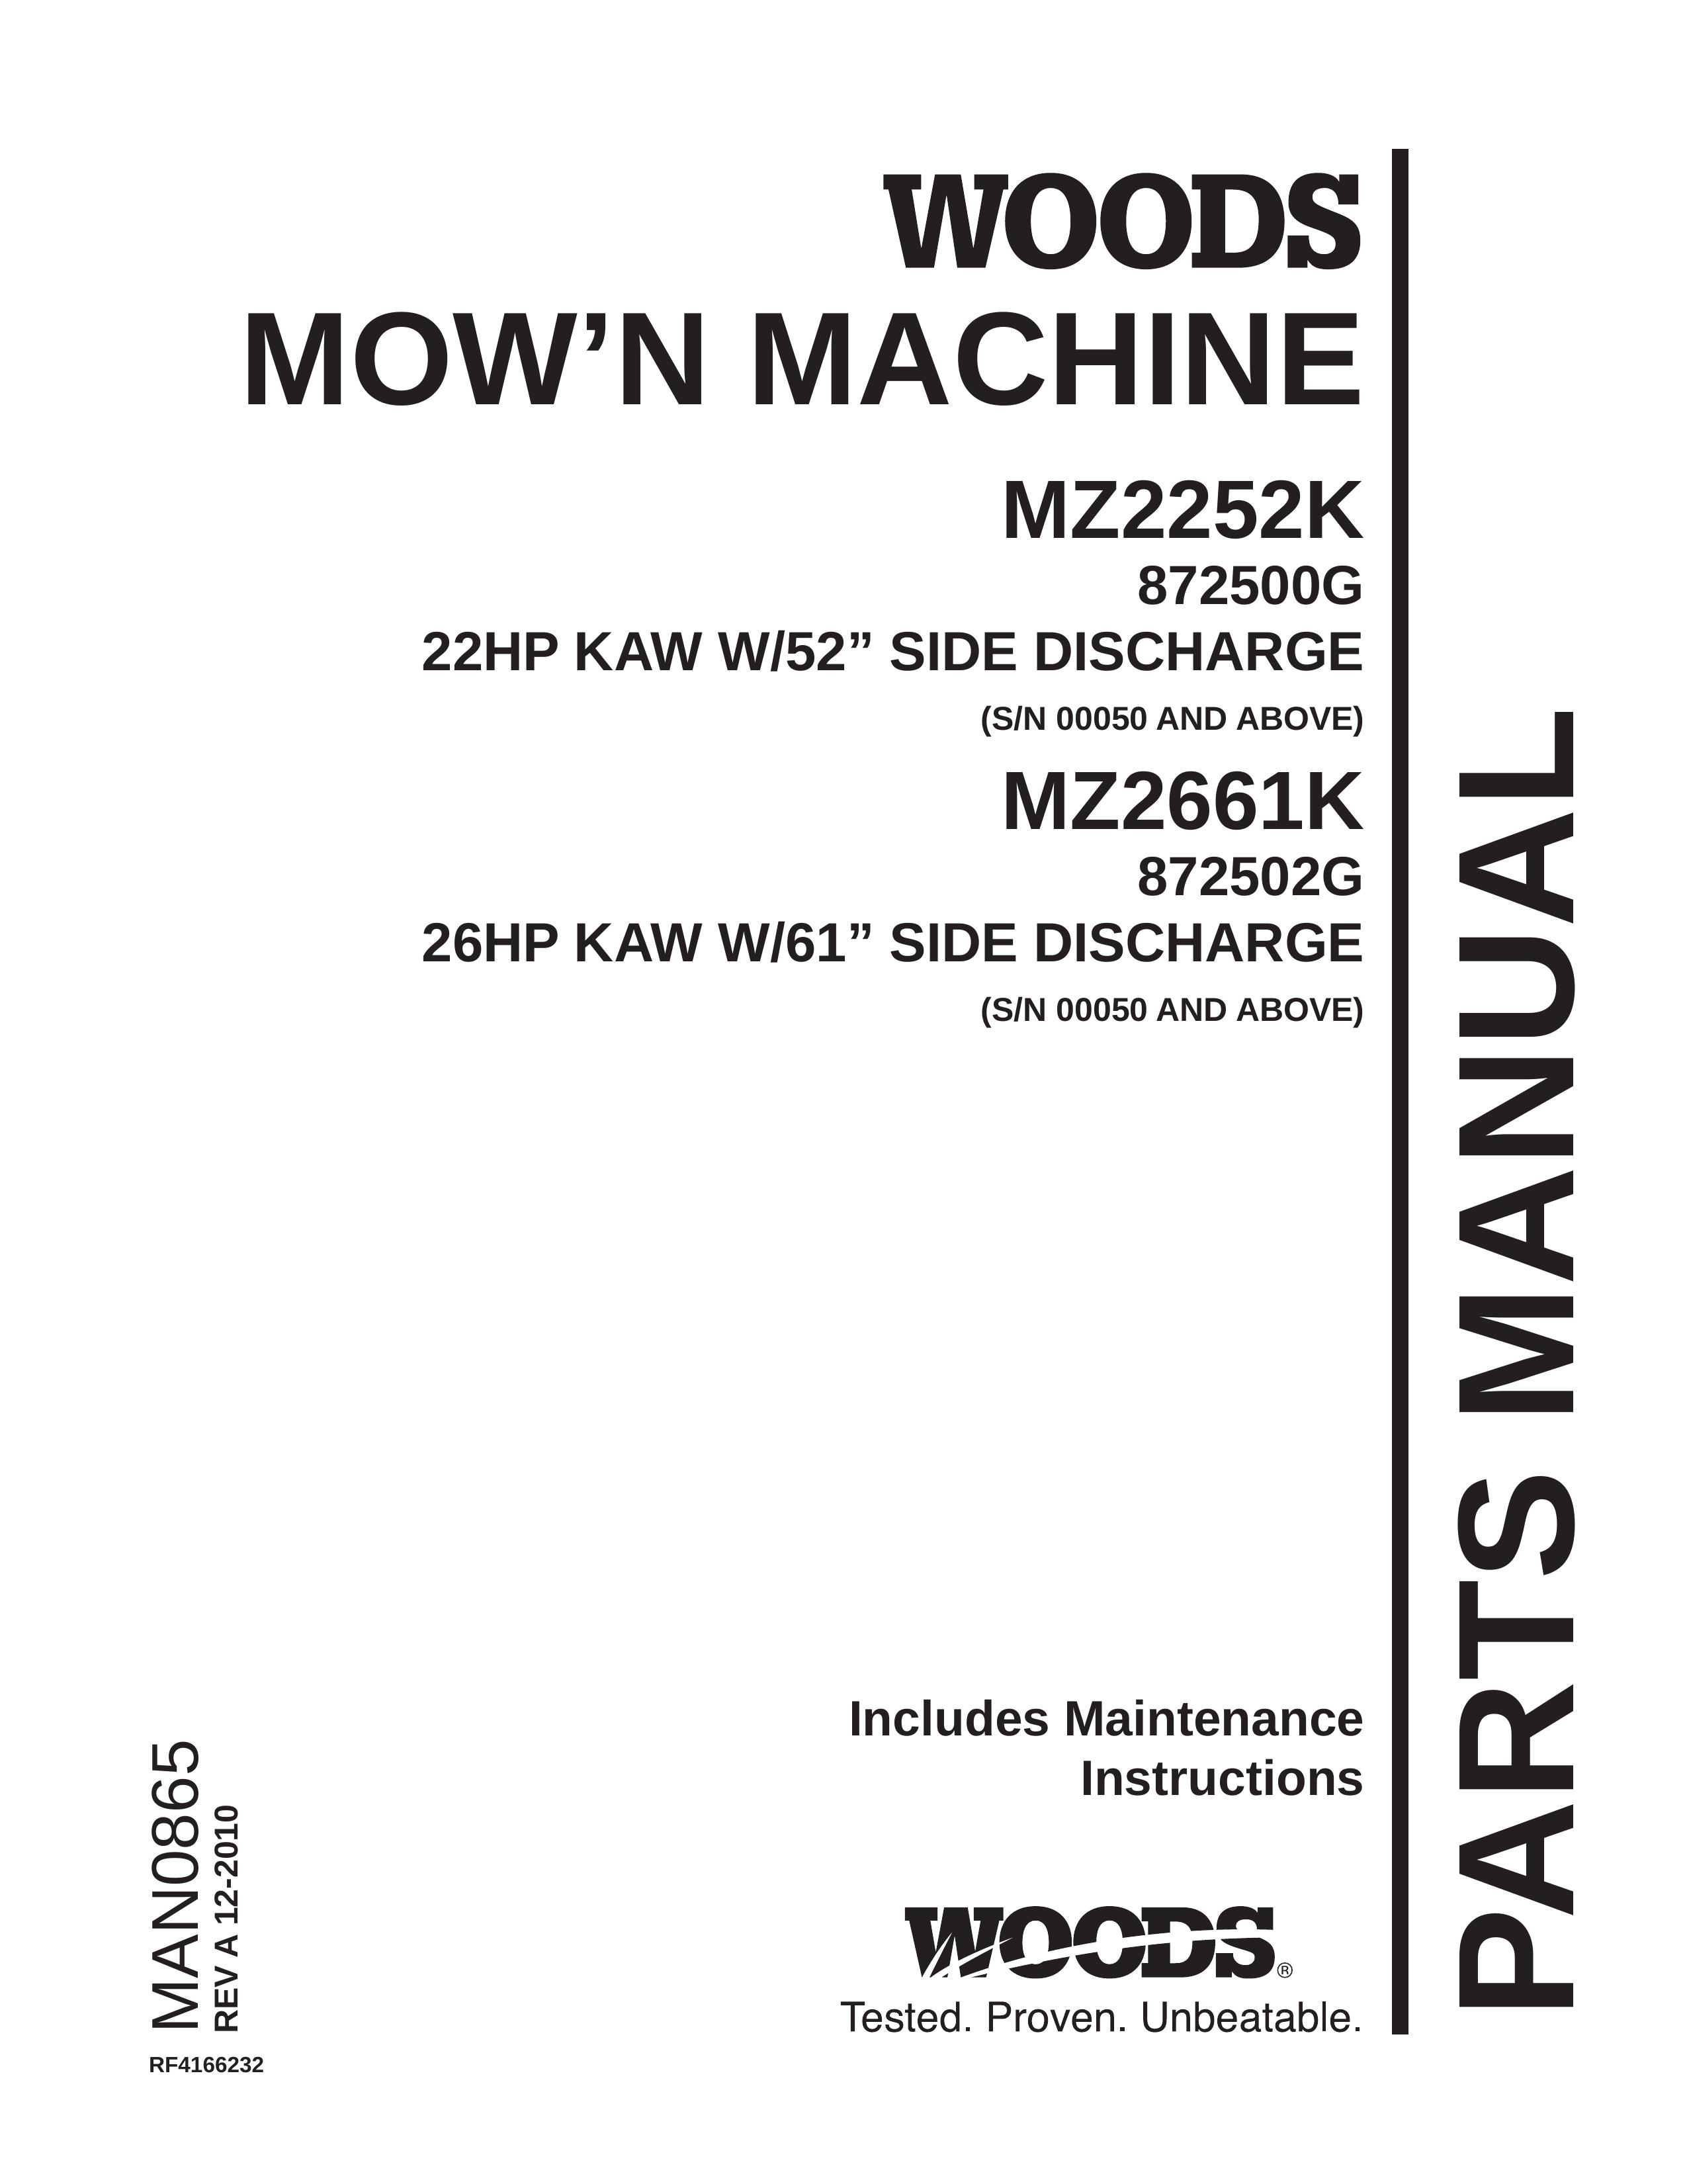 Woods Equipment MZ2252K Lawn Mower User Manual